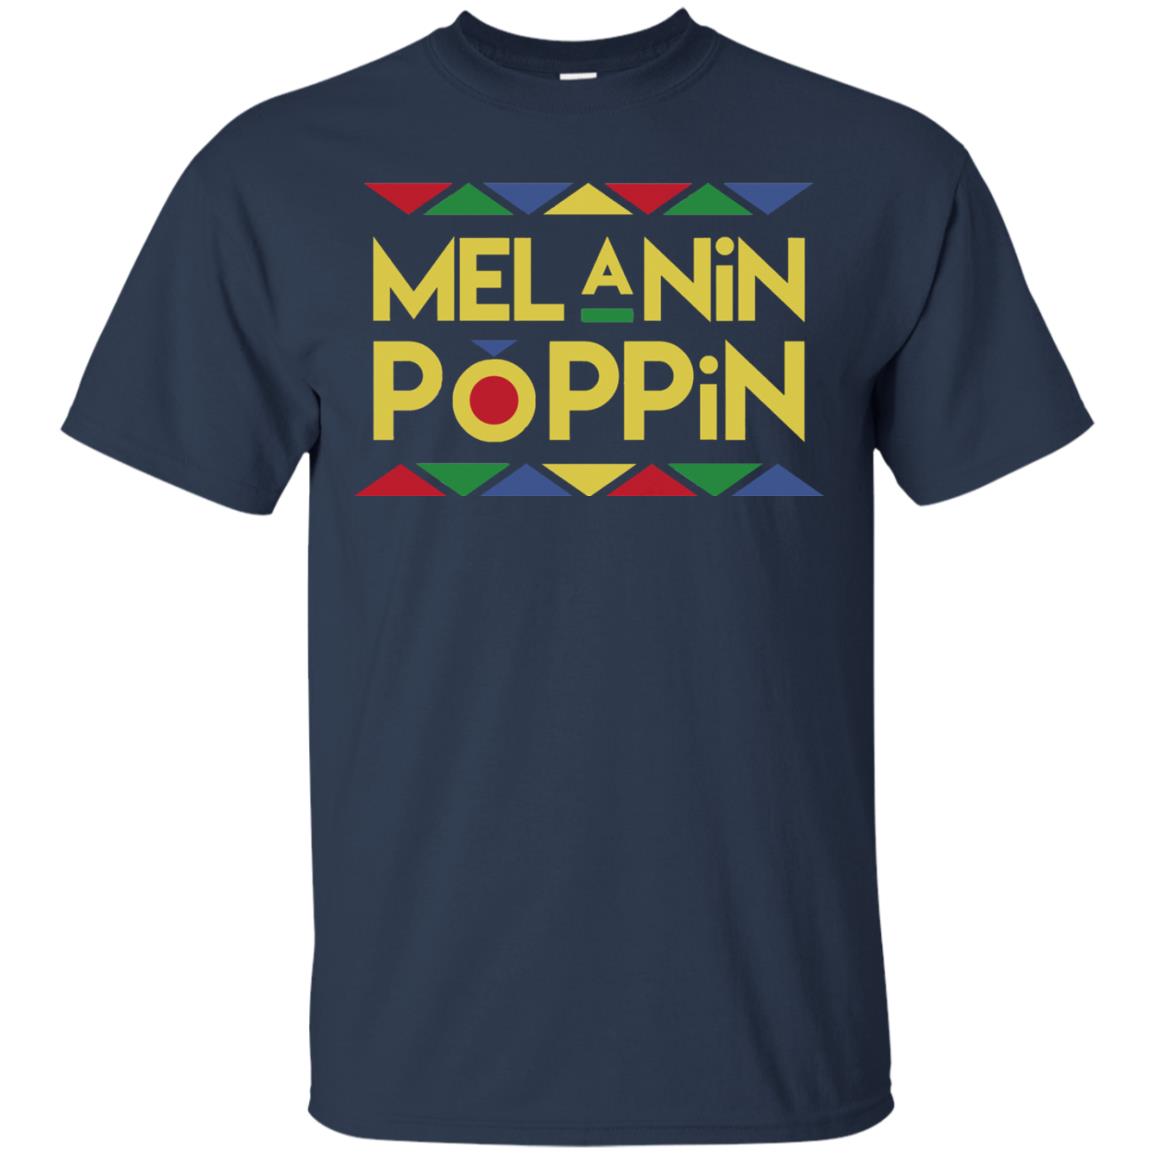 melanin poppin t shirt - navy blue